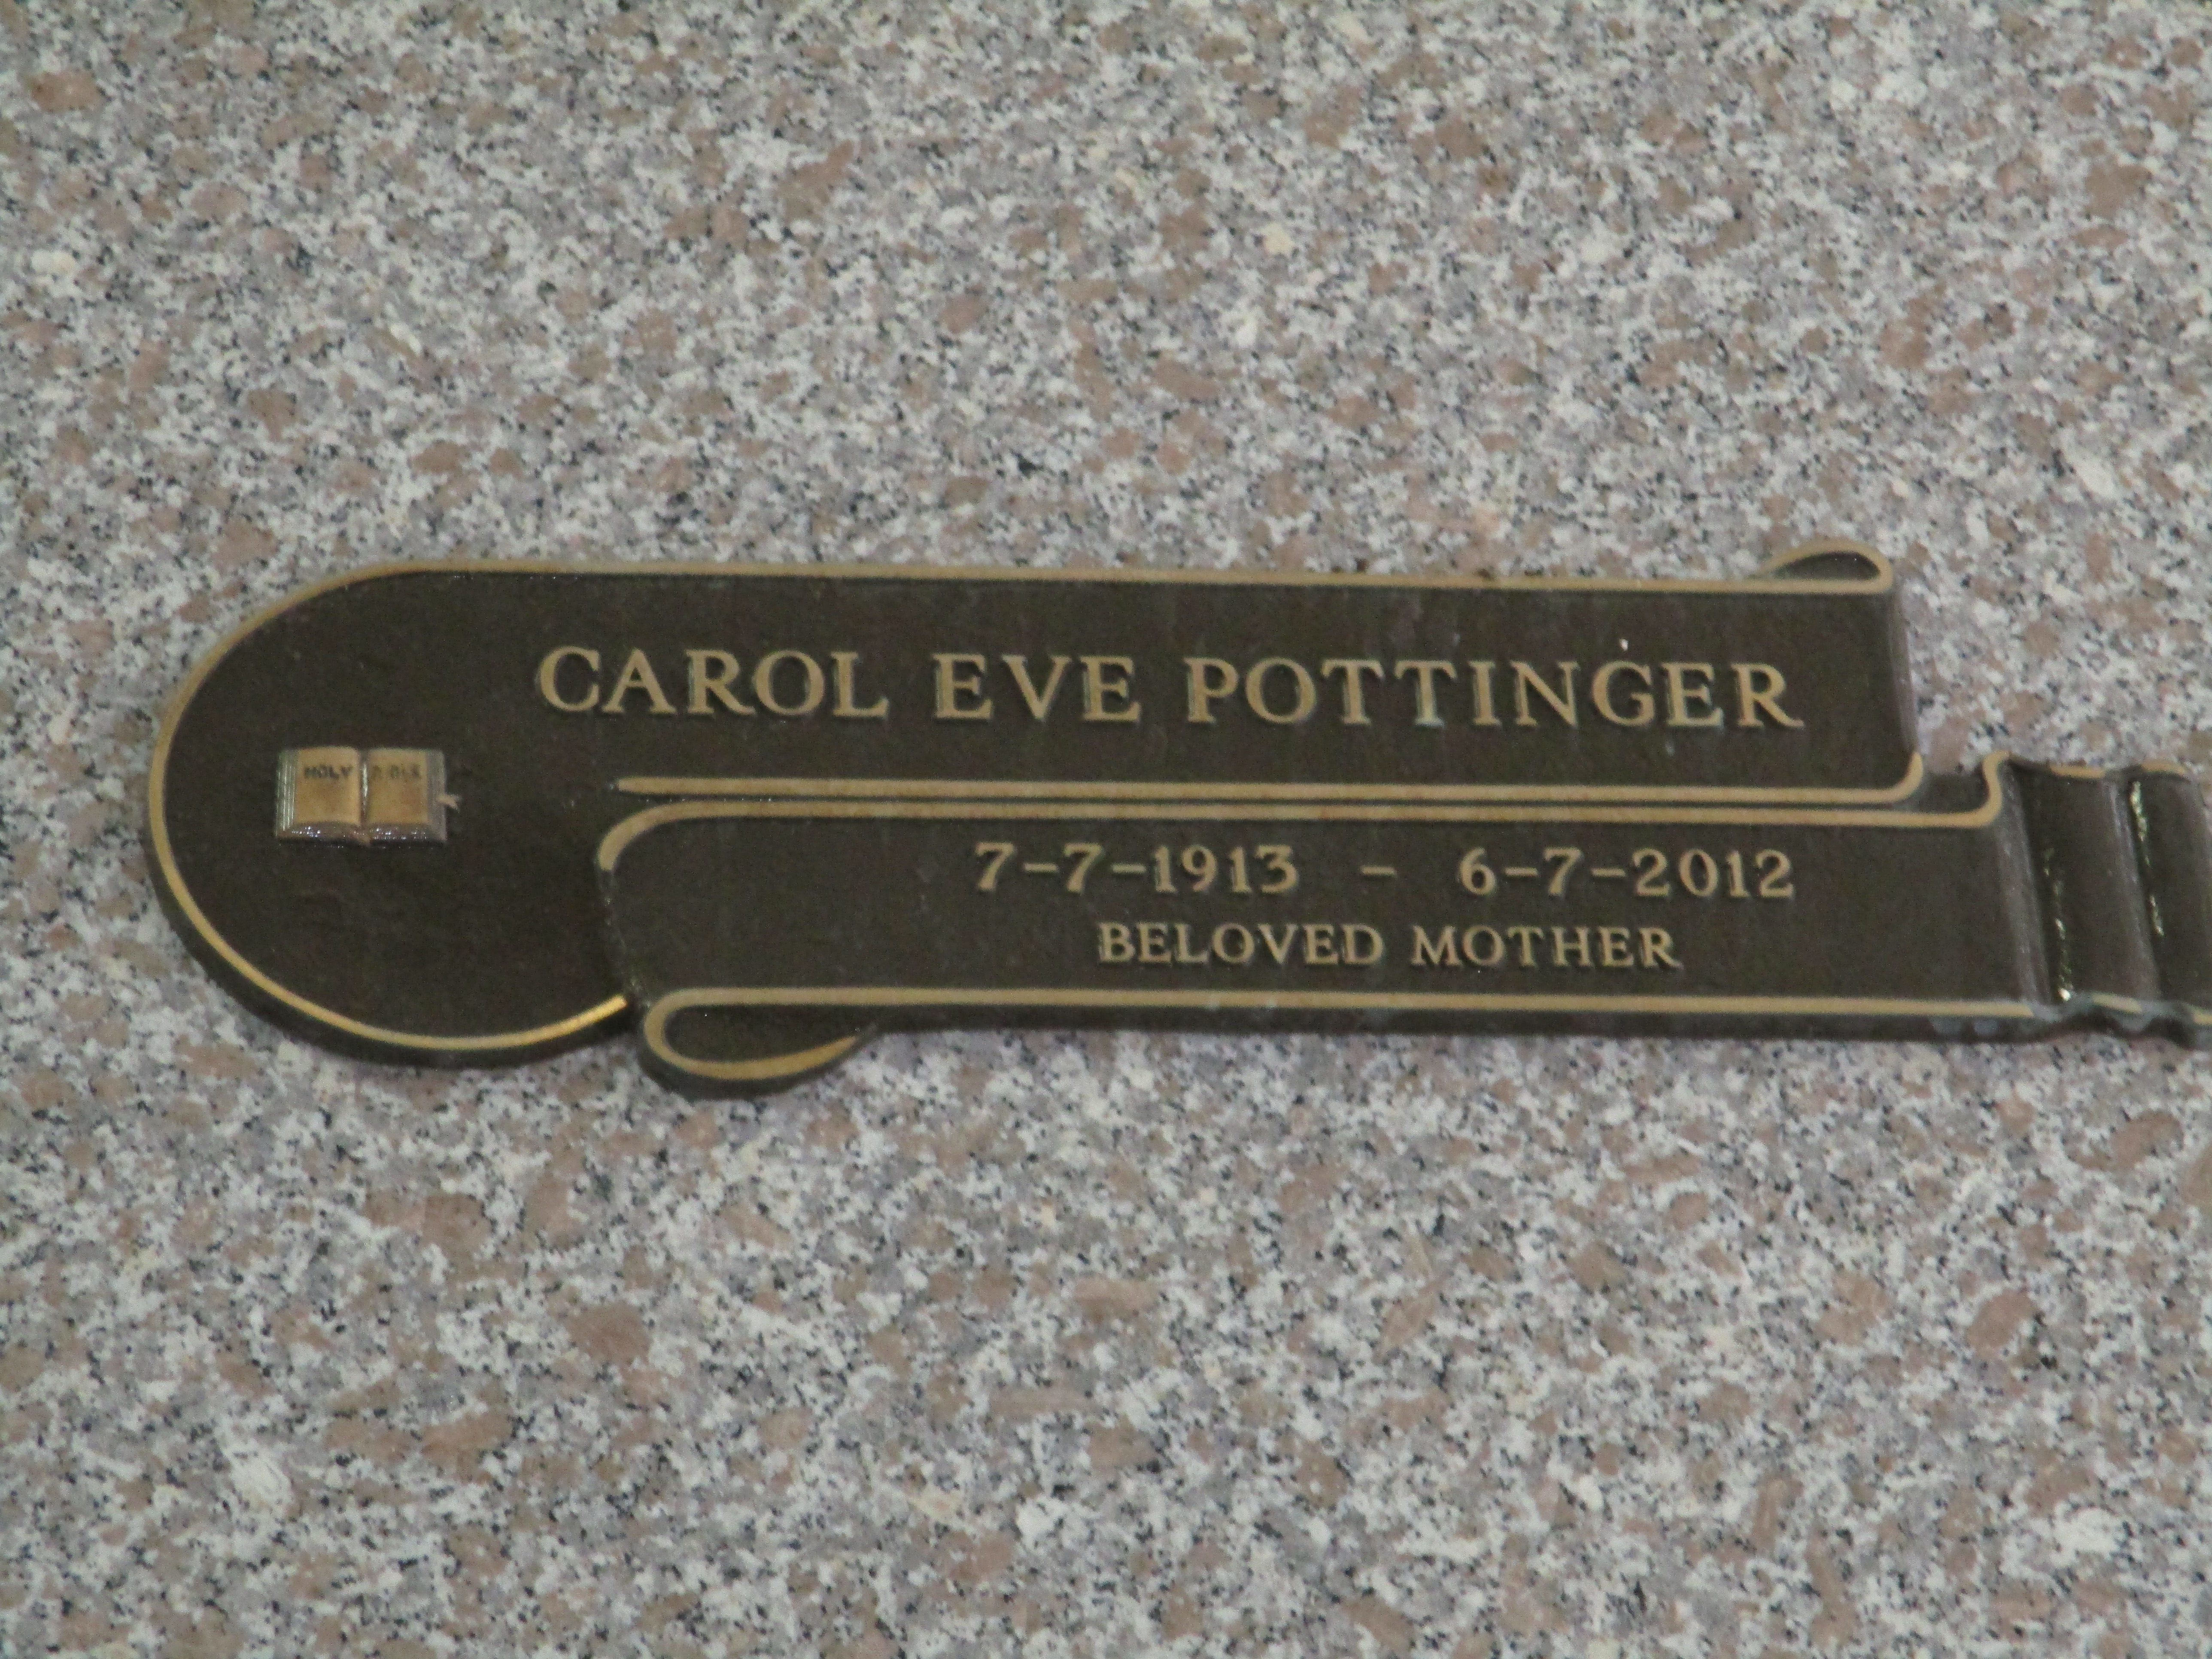 Carol Eve Pottinger